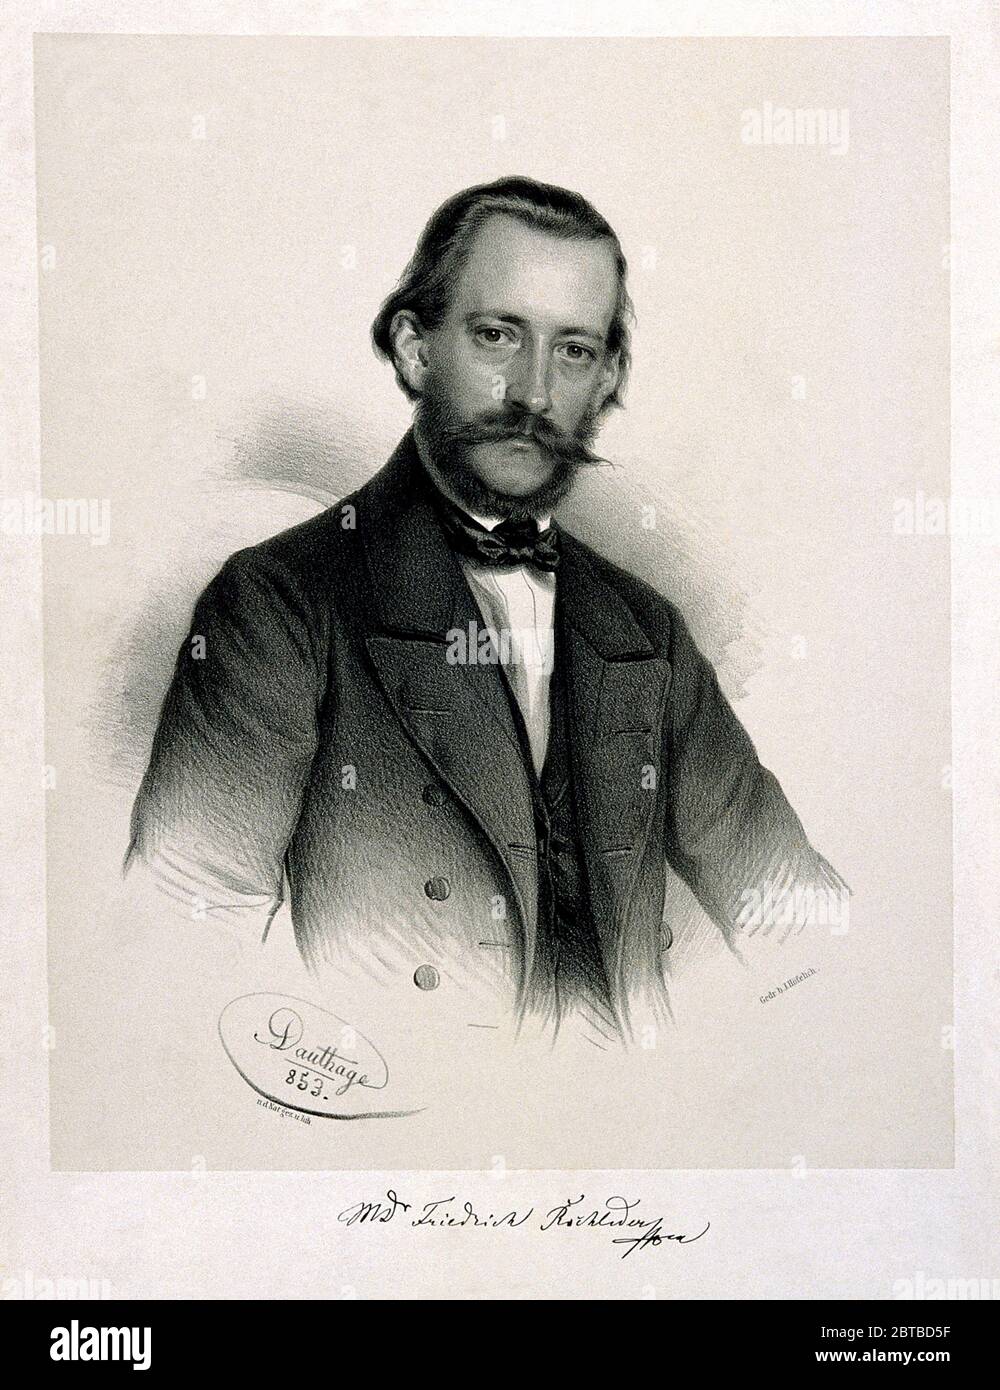 1853 , AUSTRIA :  The austrian chemist FRIEDRICH ROCHLEDER ( 1819 - 1874 ). Portrait engraved by A. Dauthage , after himself . - HISTORY  - foto storiche - foto storica  - scienziato - scientist  - portrait - ritratto - SCIENZA - SCIENCE  - CHIMICA - CHEMISTRY -  baffi - moustache - beard - barba - paillon - tie bow - cravatta - incisione - engraving - illustrazione - illustration ---  Archivio GBB Stock Photo